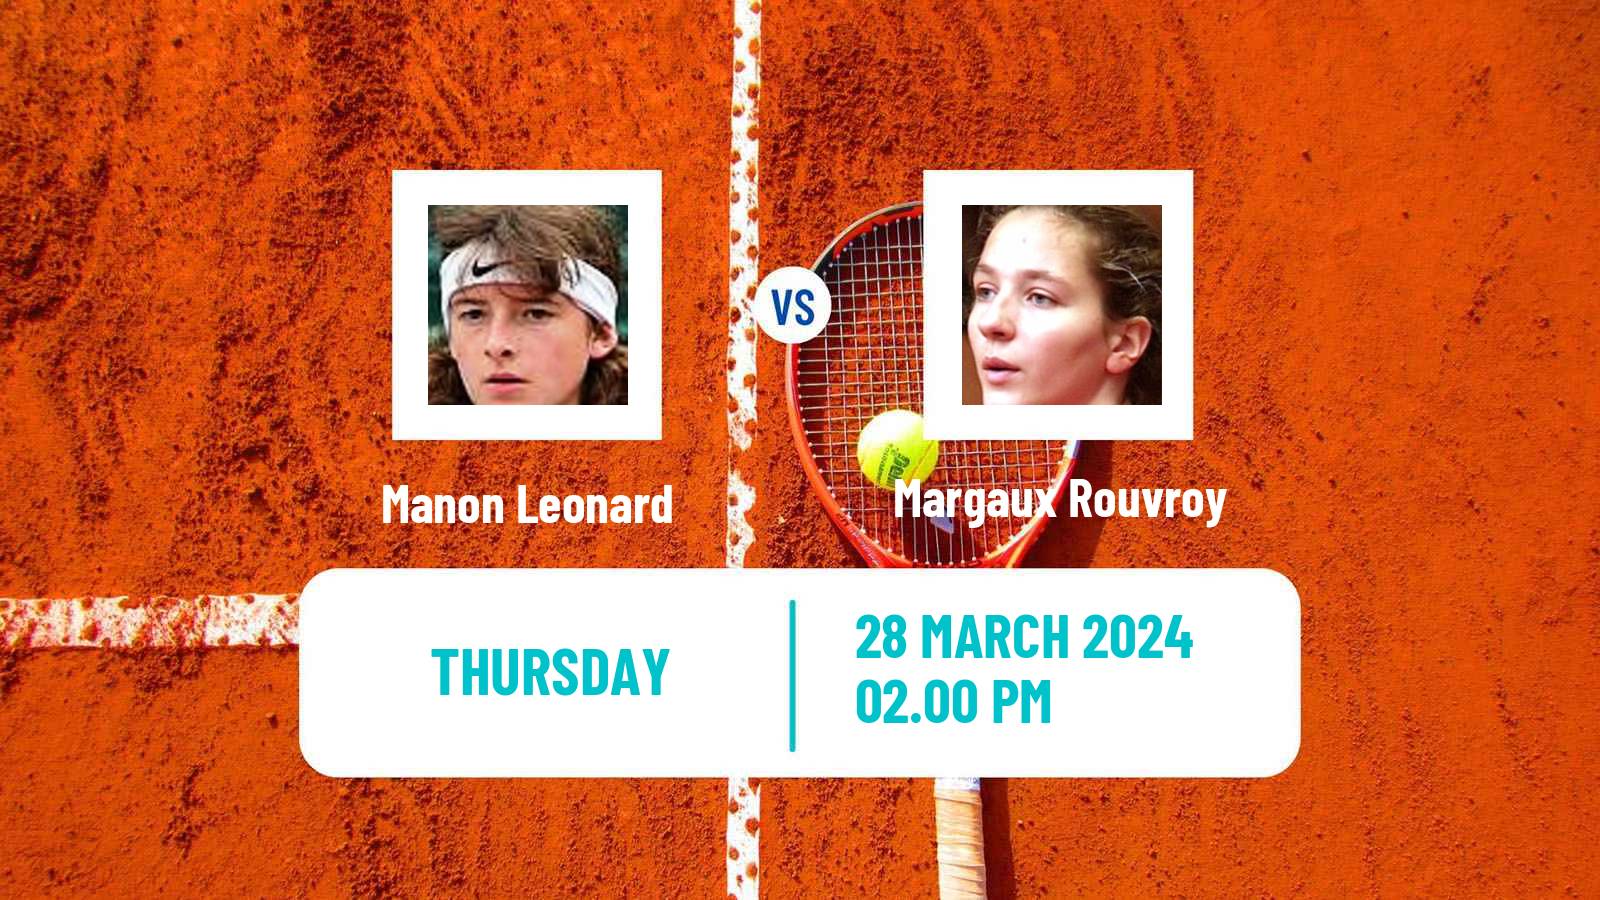 Tennis ITF W75 Croissy Beaubourg Women Manon Leonard - Margaux Rouvroy